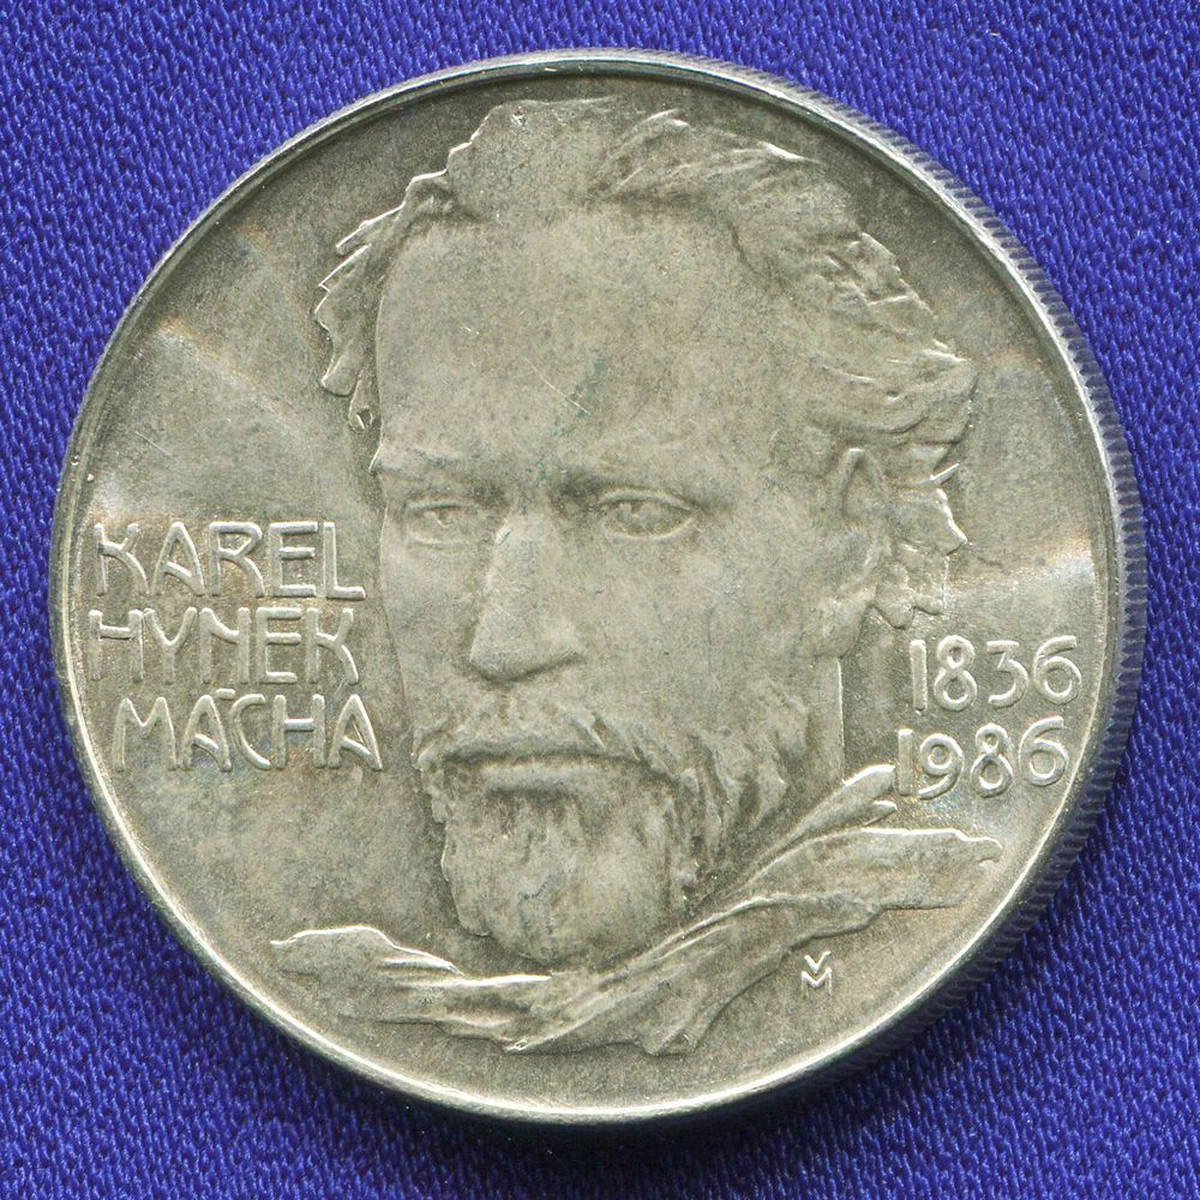 Чехословакия 100 крон 1986 UNC Карел Маха  - 10442